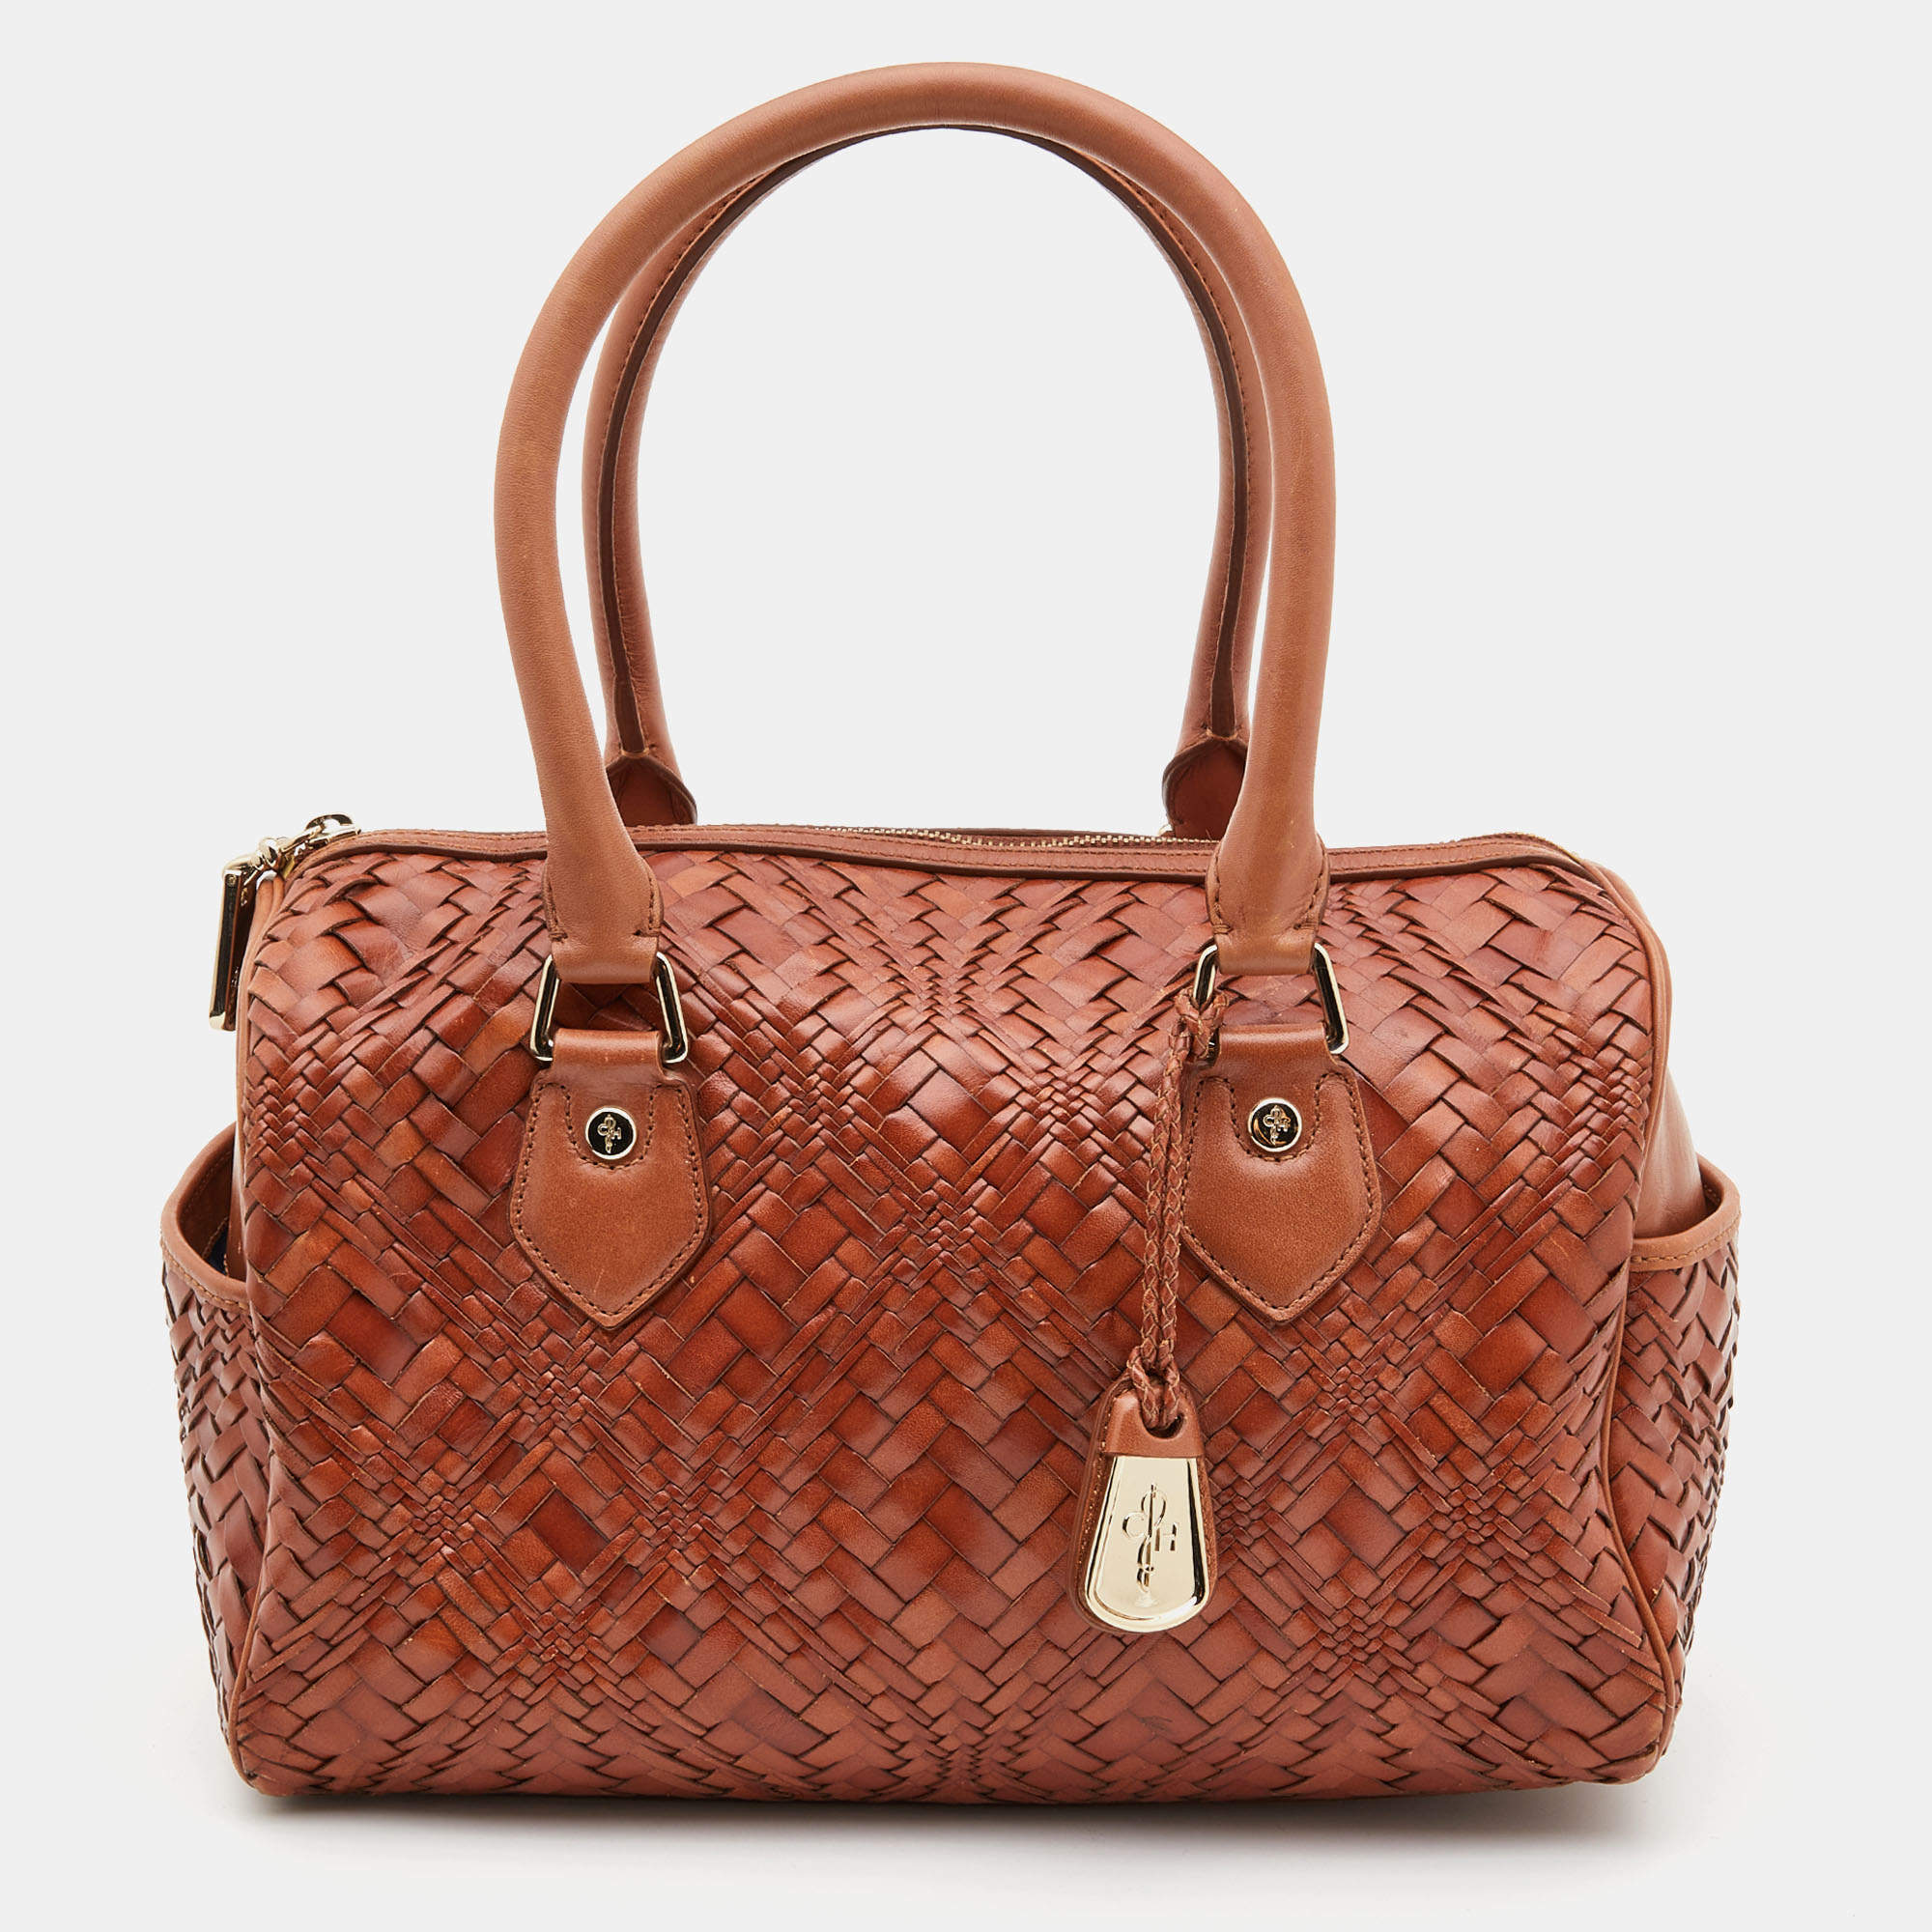 Cole Haan Tan Woven Leather Boston Bag